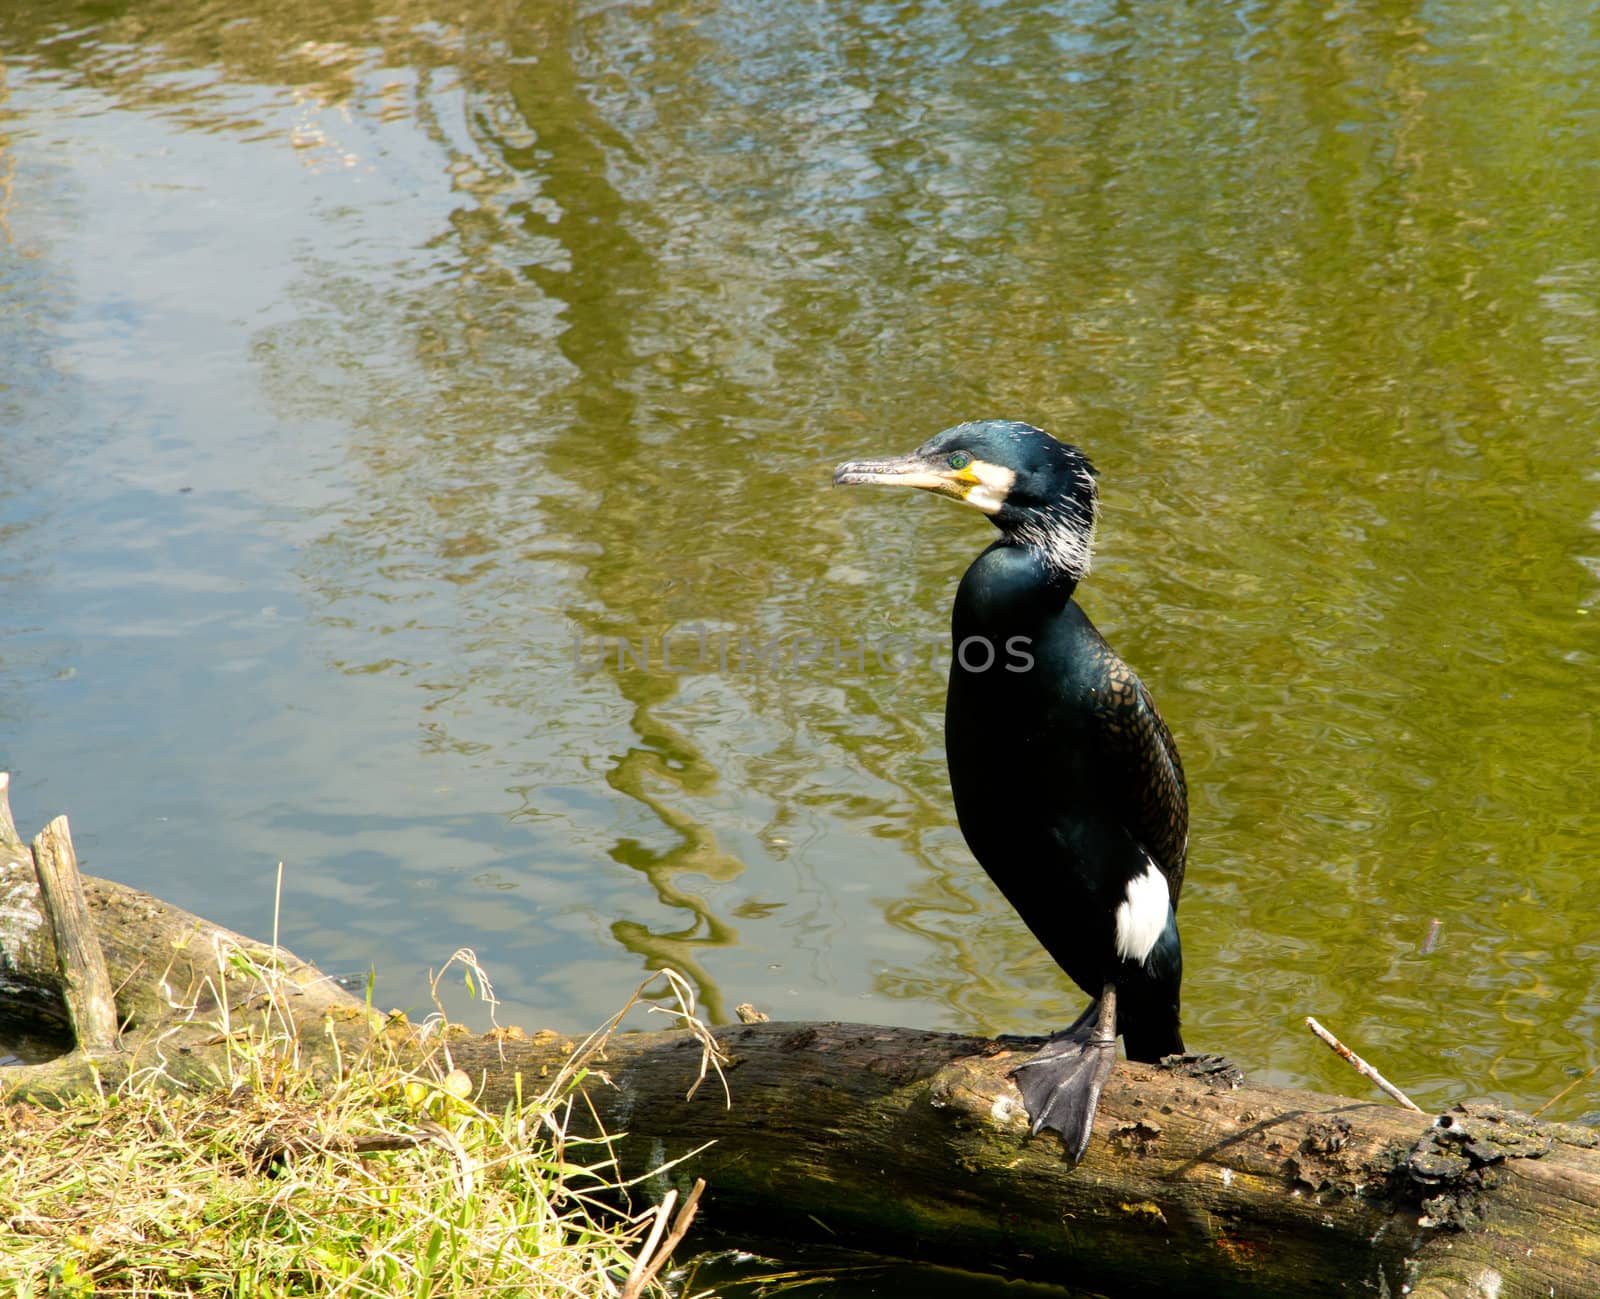 Black water bird, sitting at a tree